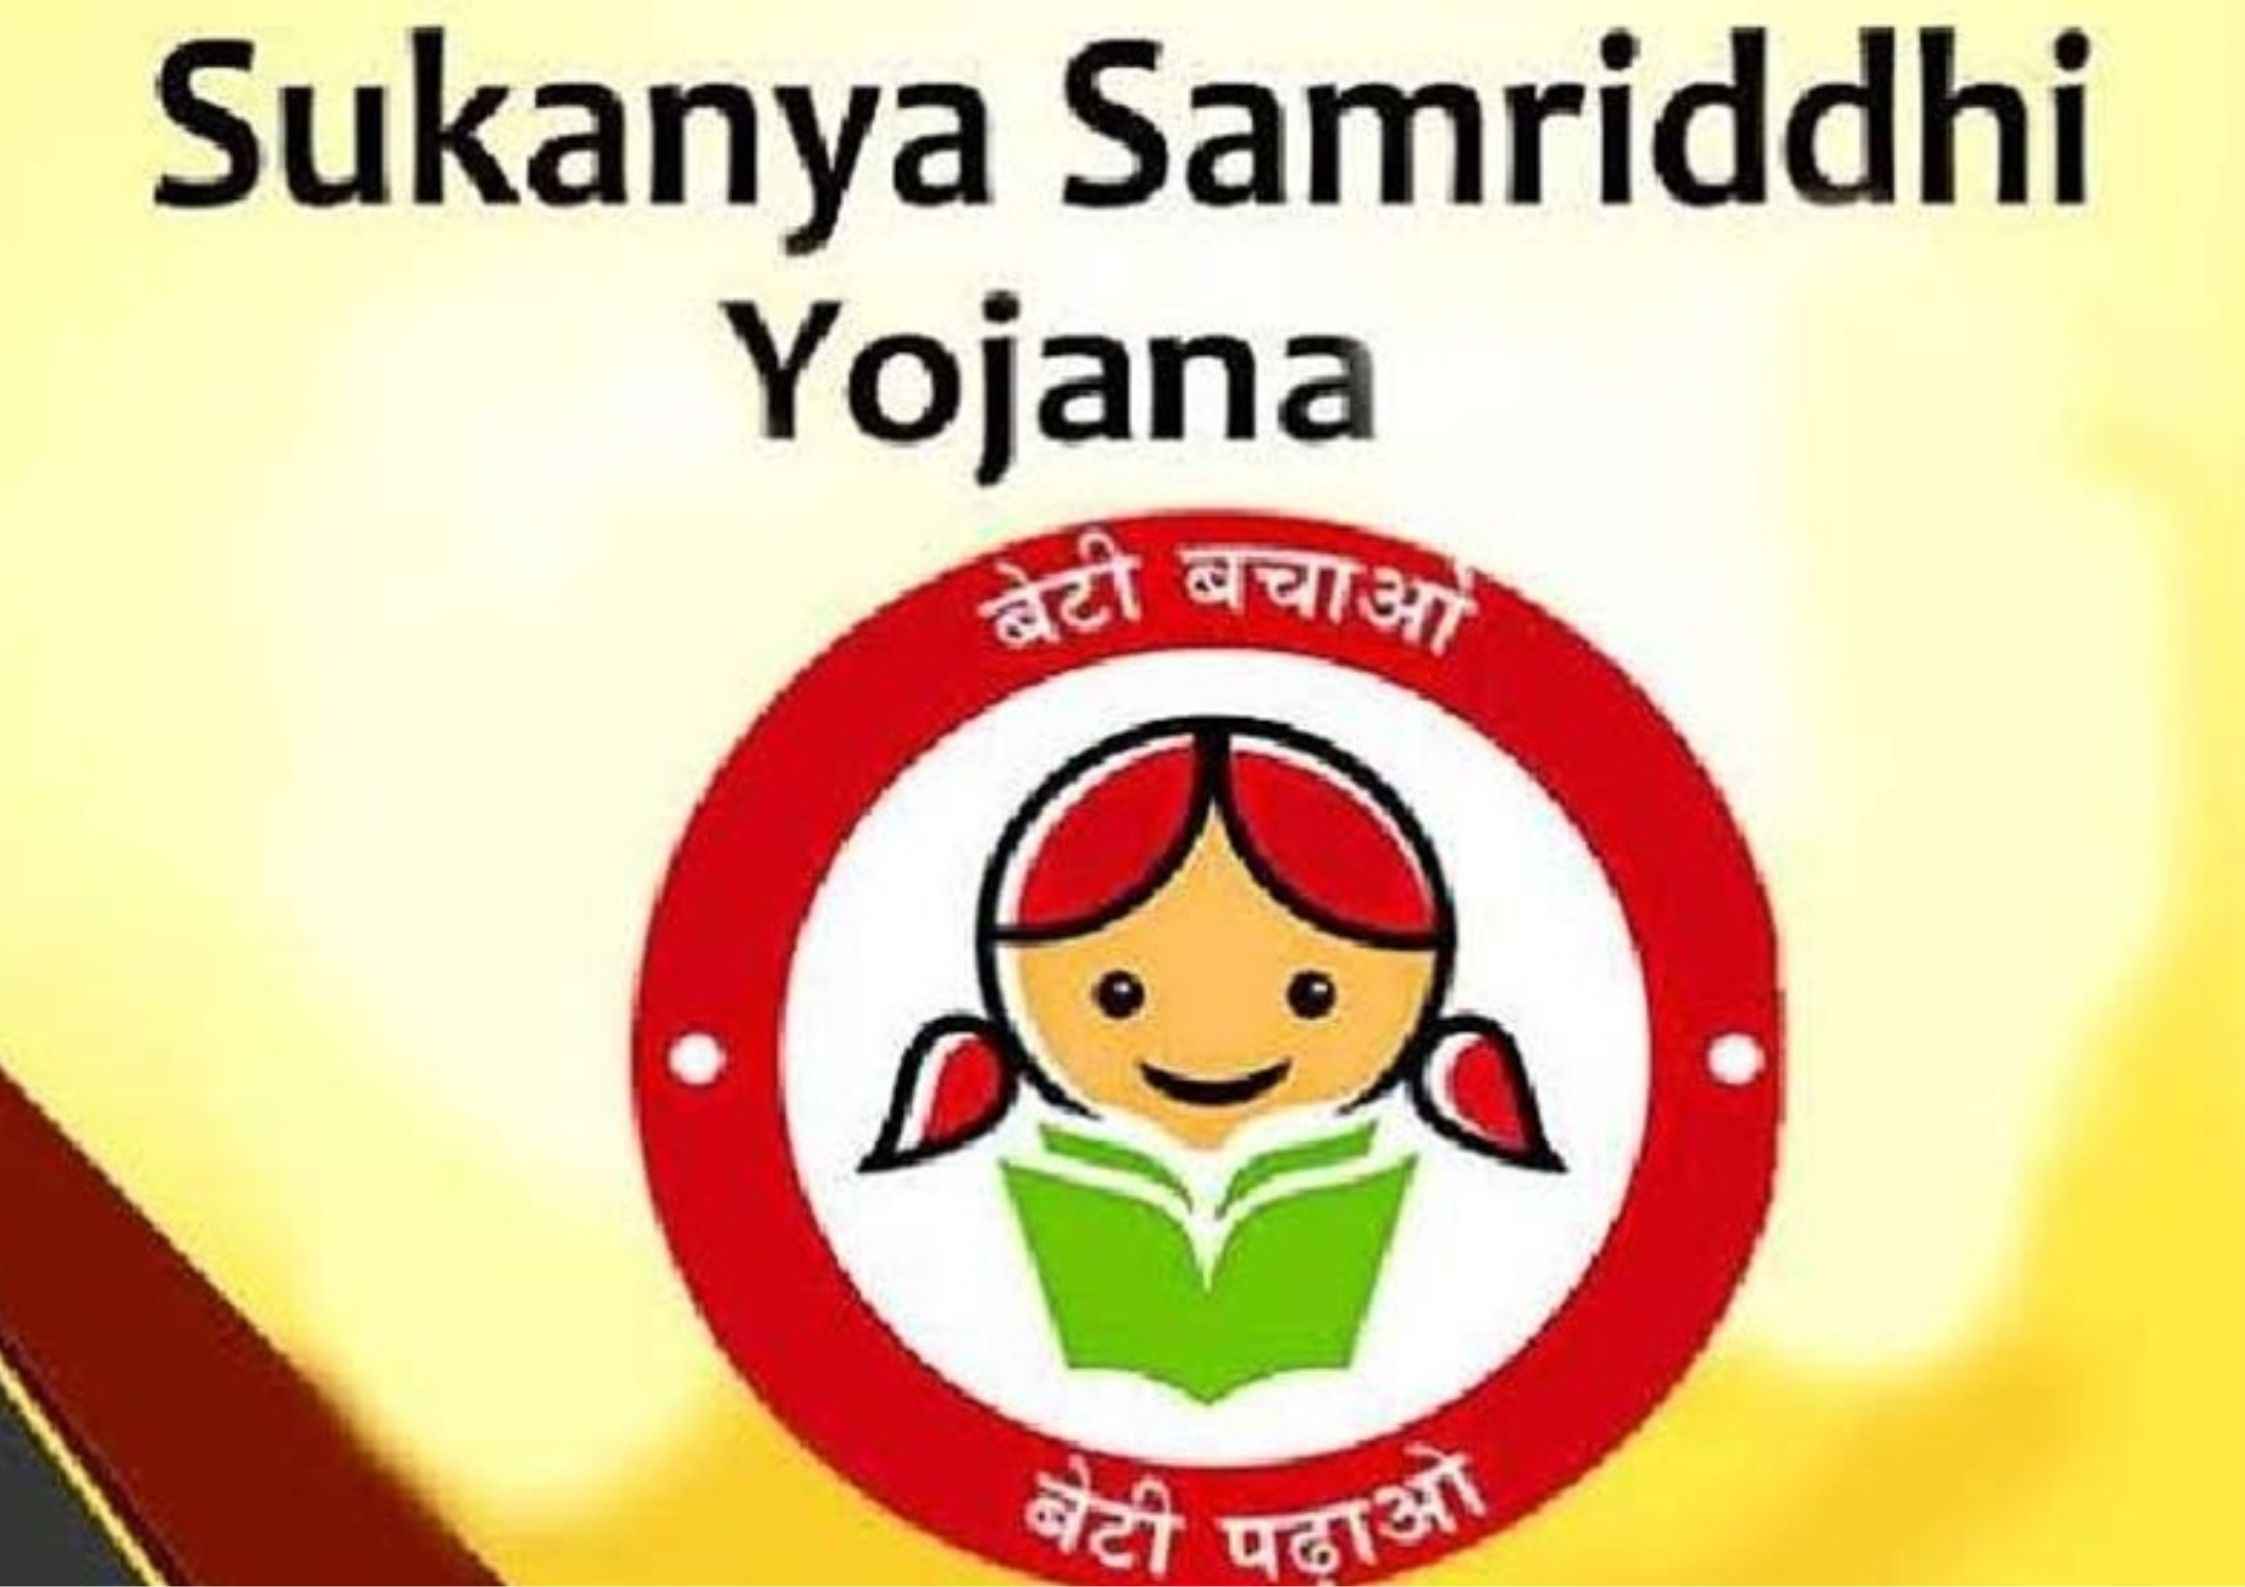 Sukanya Samriddhi Yojana in Hindi